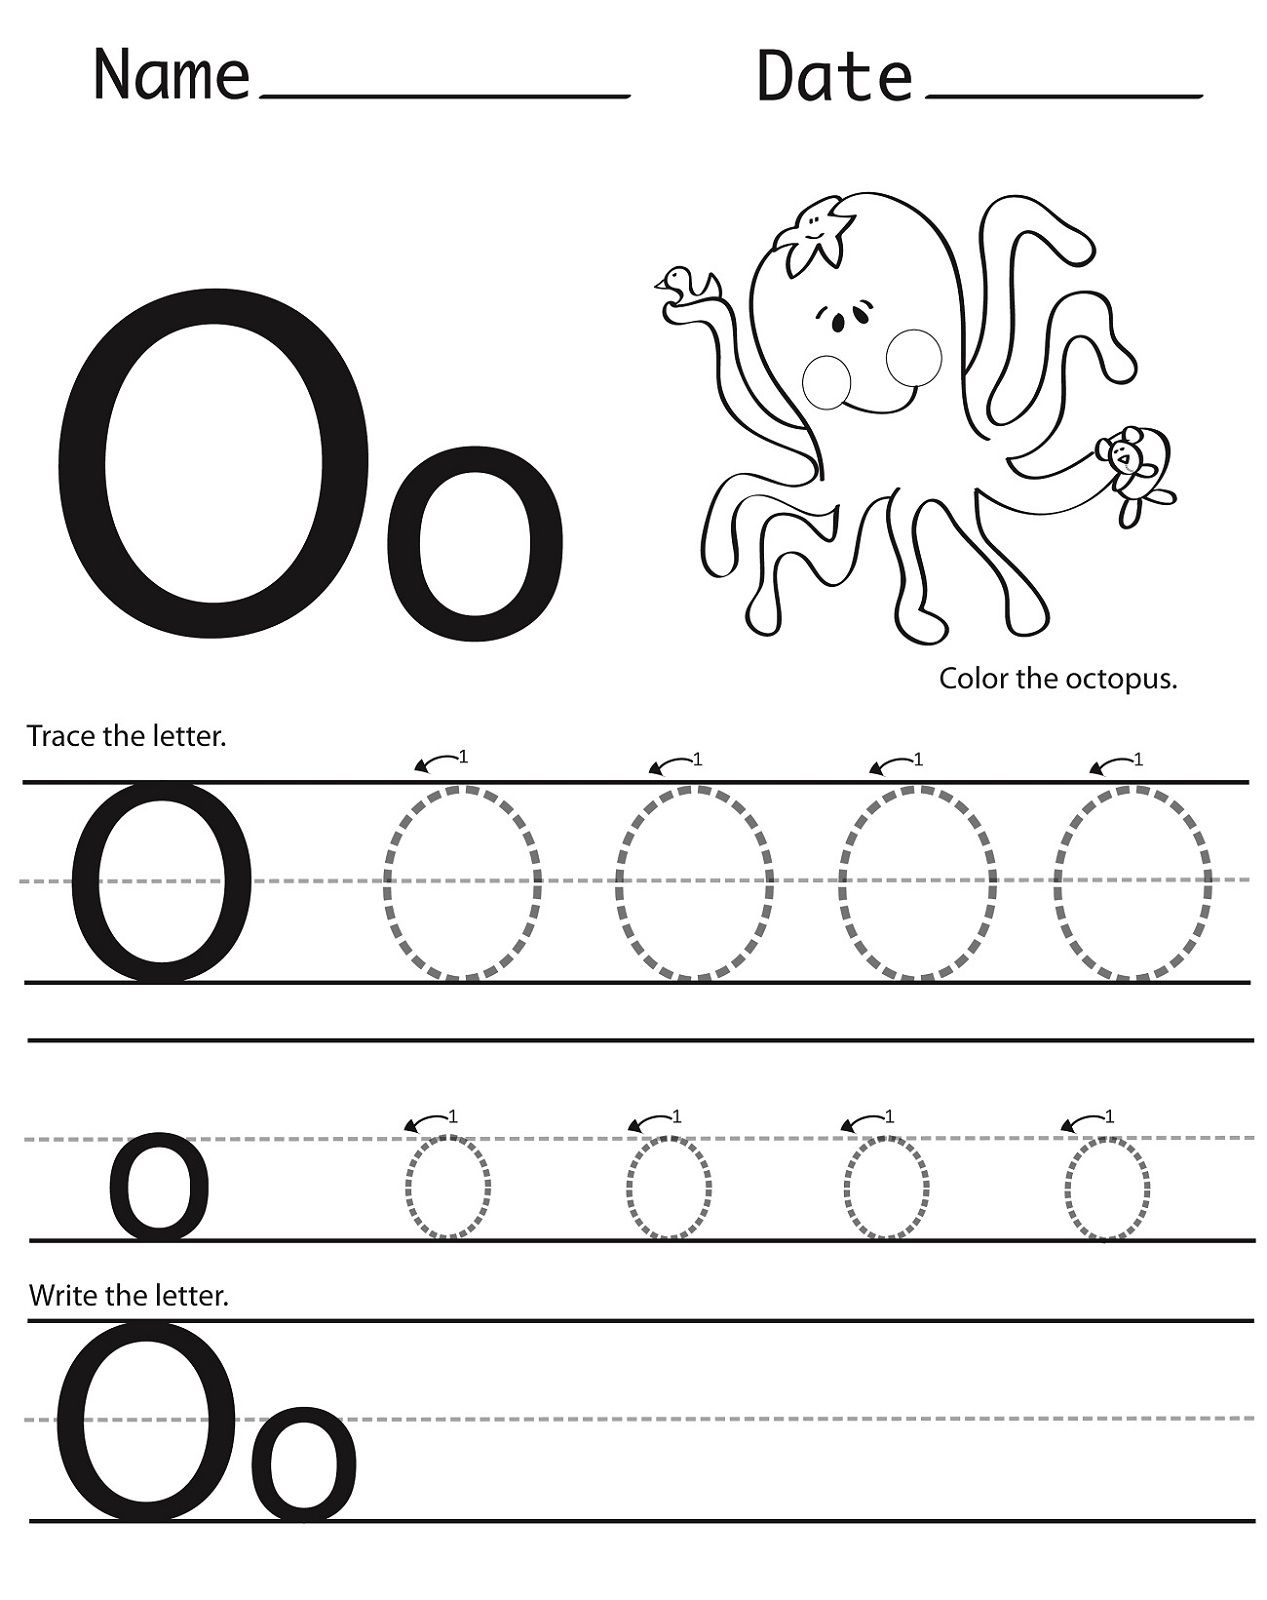 Letter O Worksheets - Kids Learning Activity | Letter O regarding Trace Letter O Worksheets Preschool